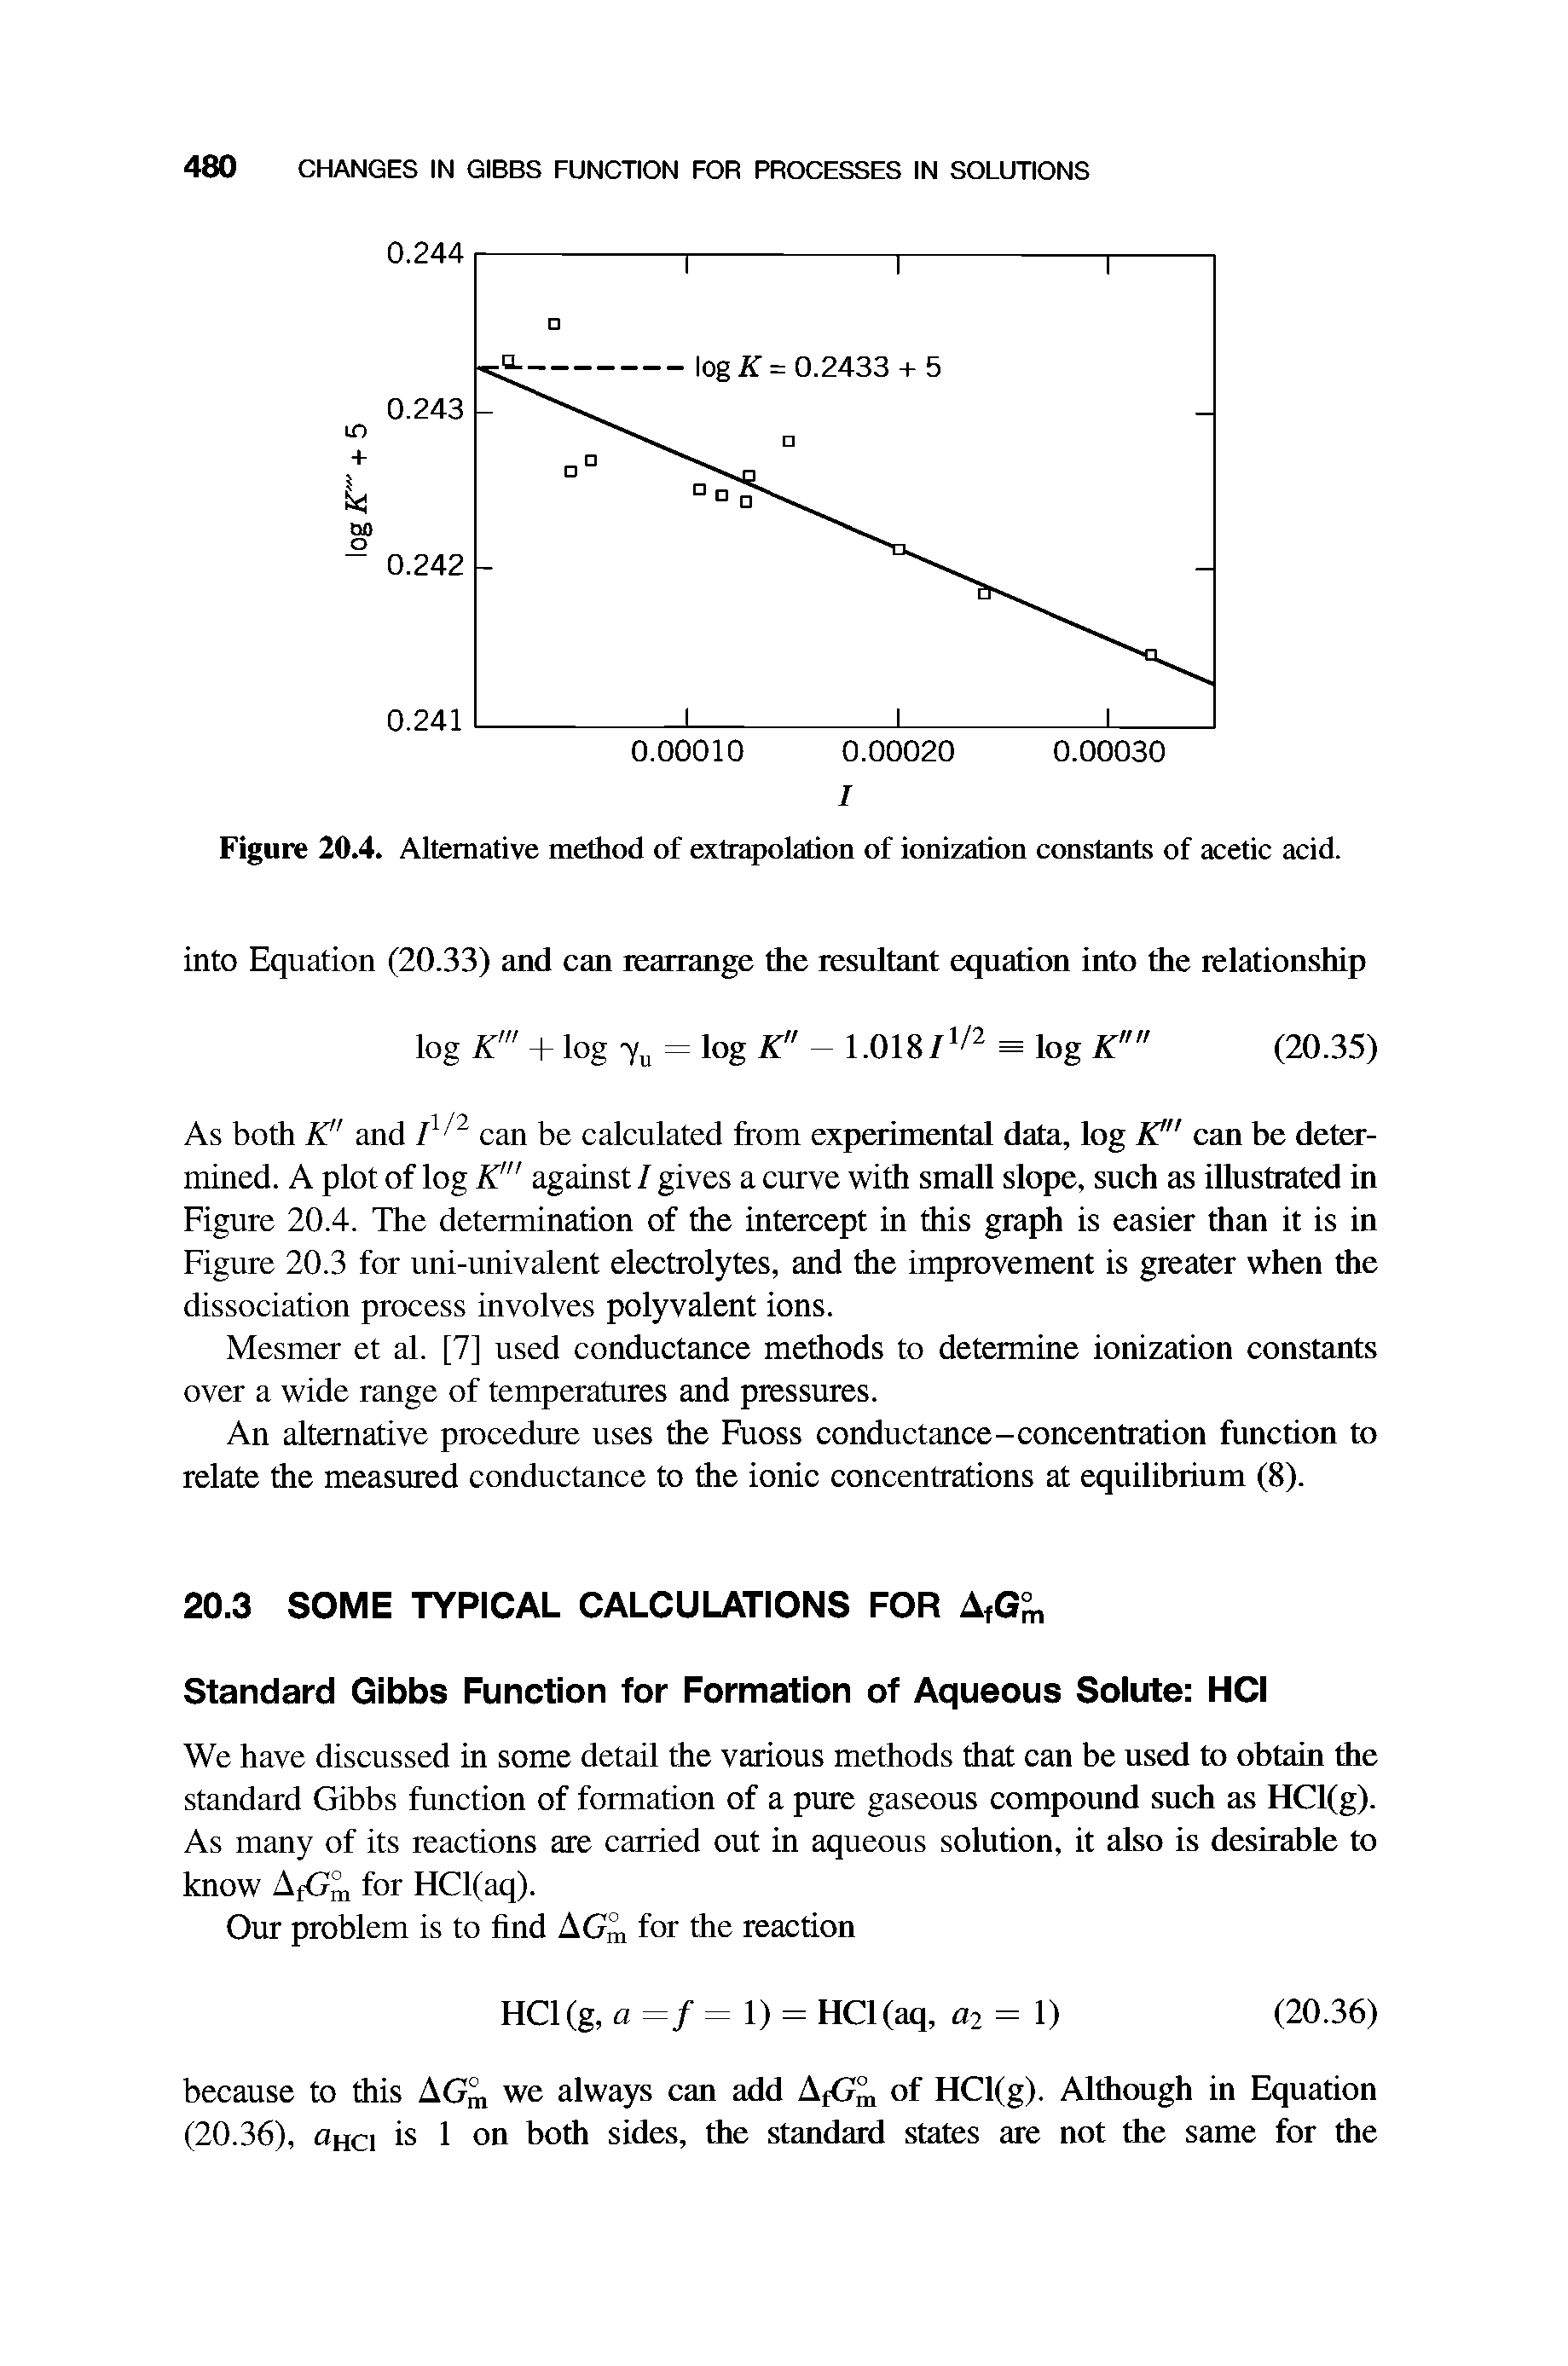 Figure 20.4. Alternative method of extrapolation of ionization constants of acetic acid.